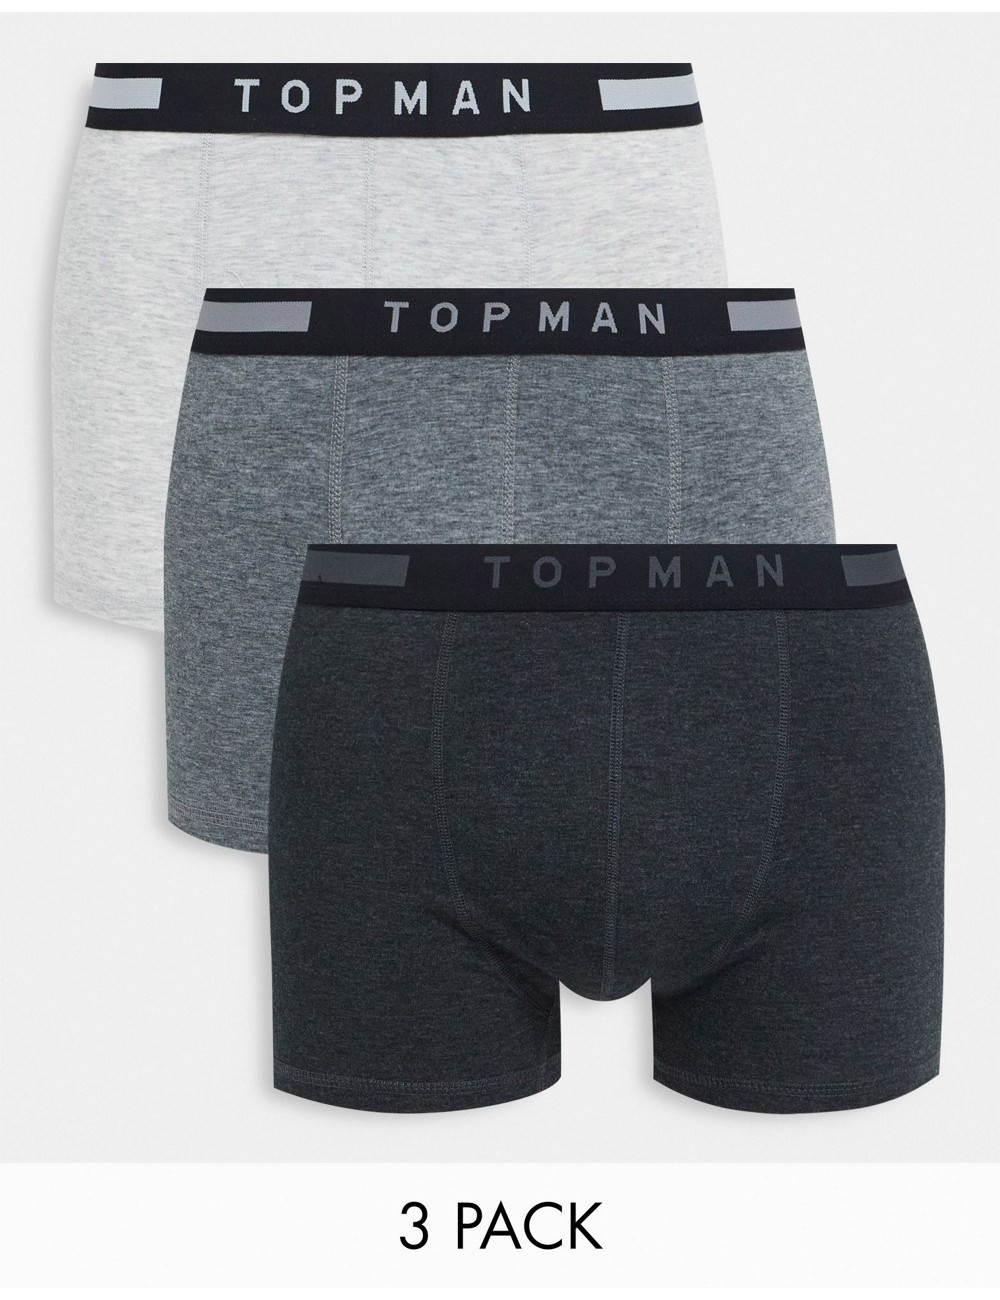 Topman 3 pack trunks in grey